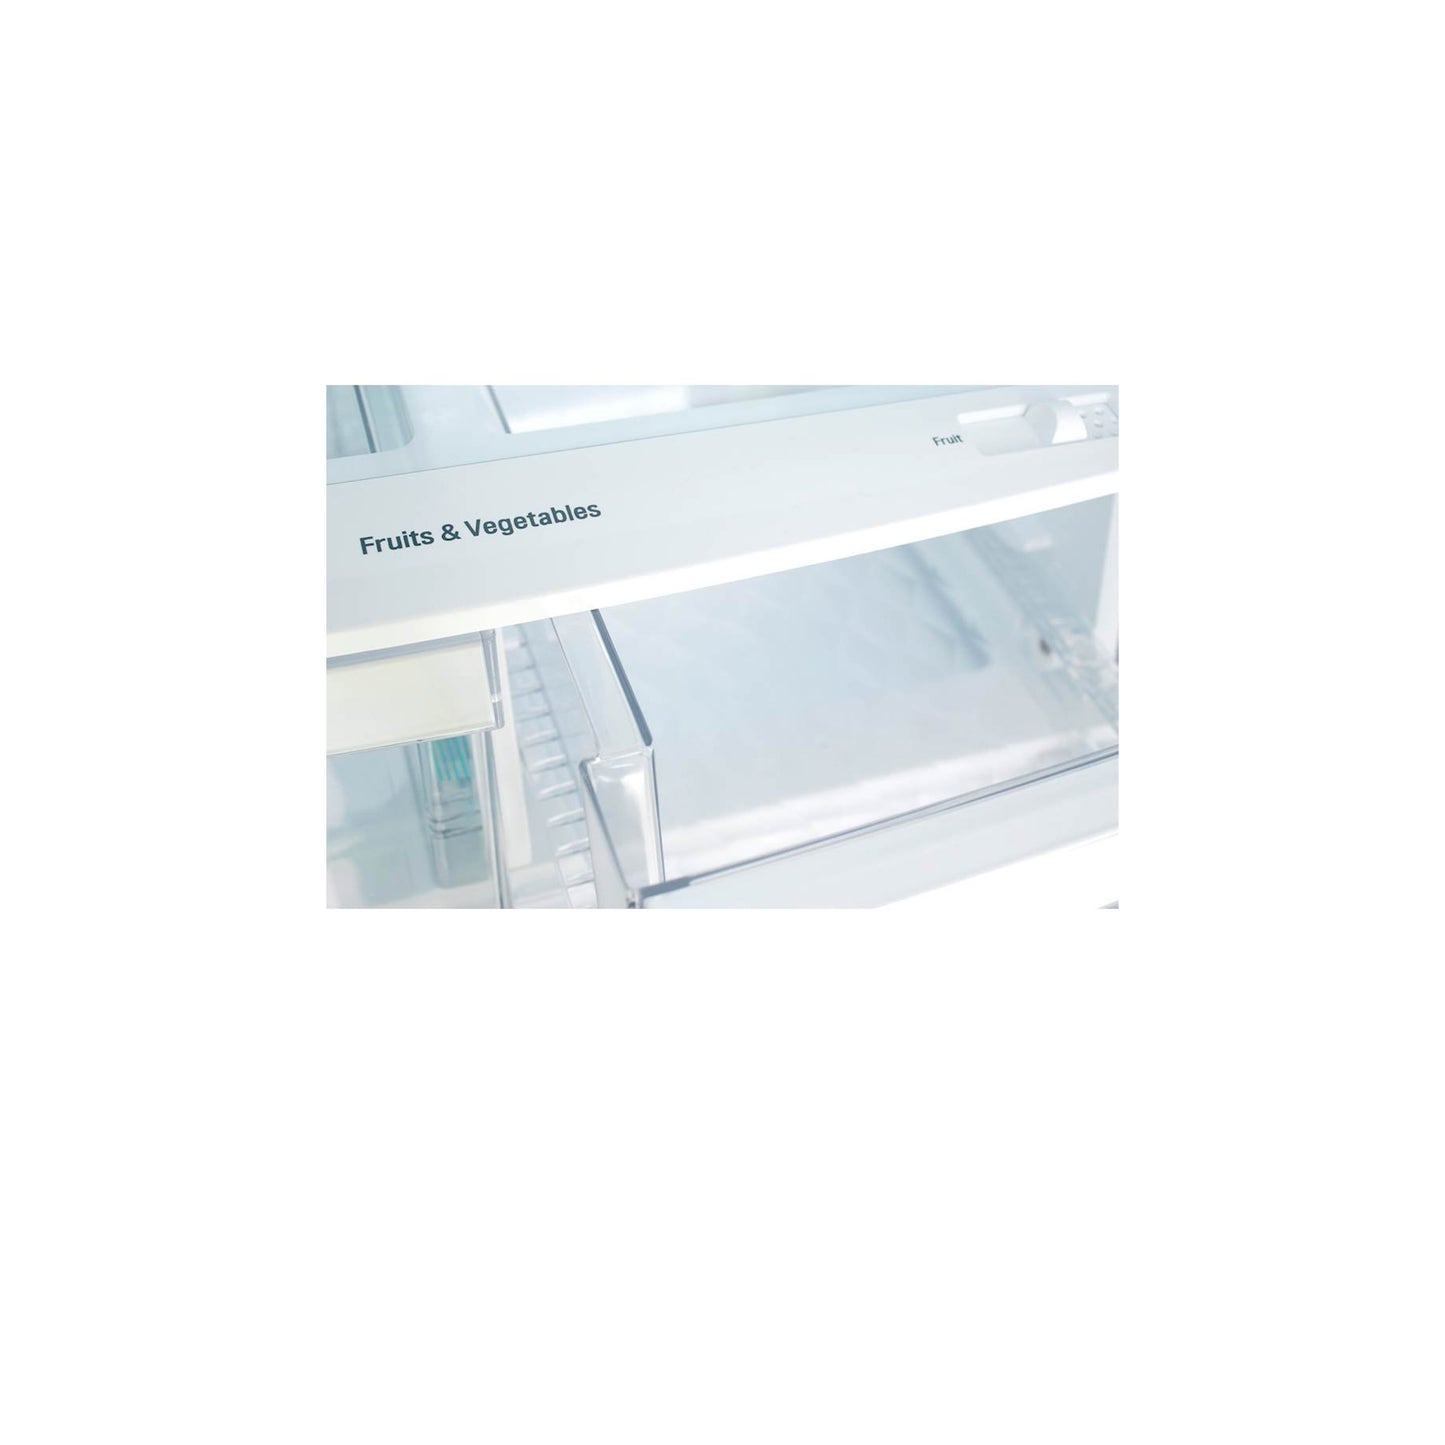 36-inch Wide Counter-Depth Refrigerator - 23 cu. ft. - LRMDC2306S